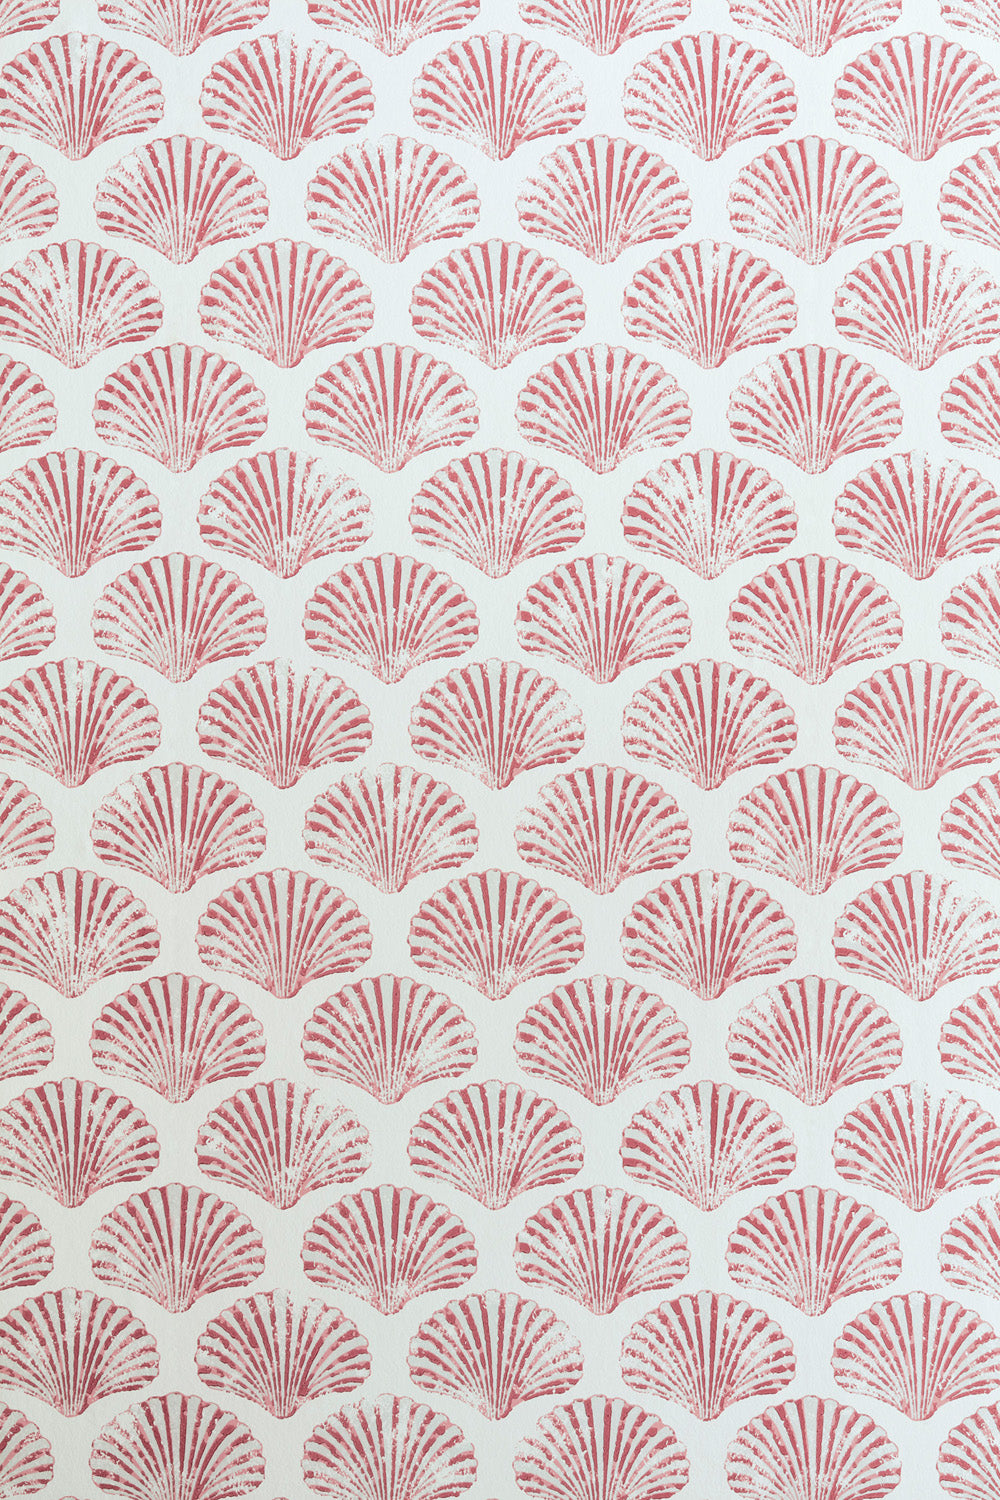 Scallop Shell Nursery Room Wallpaper 3 - Pink